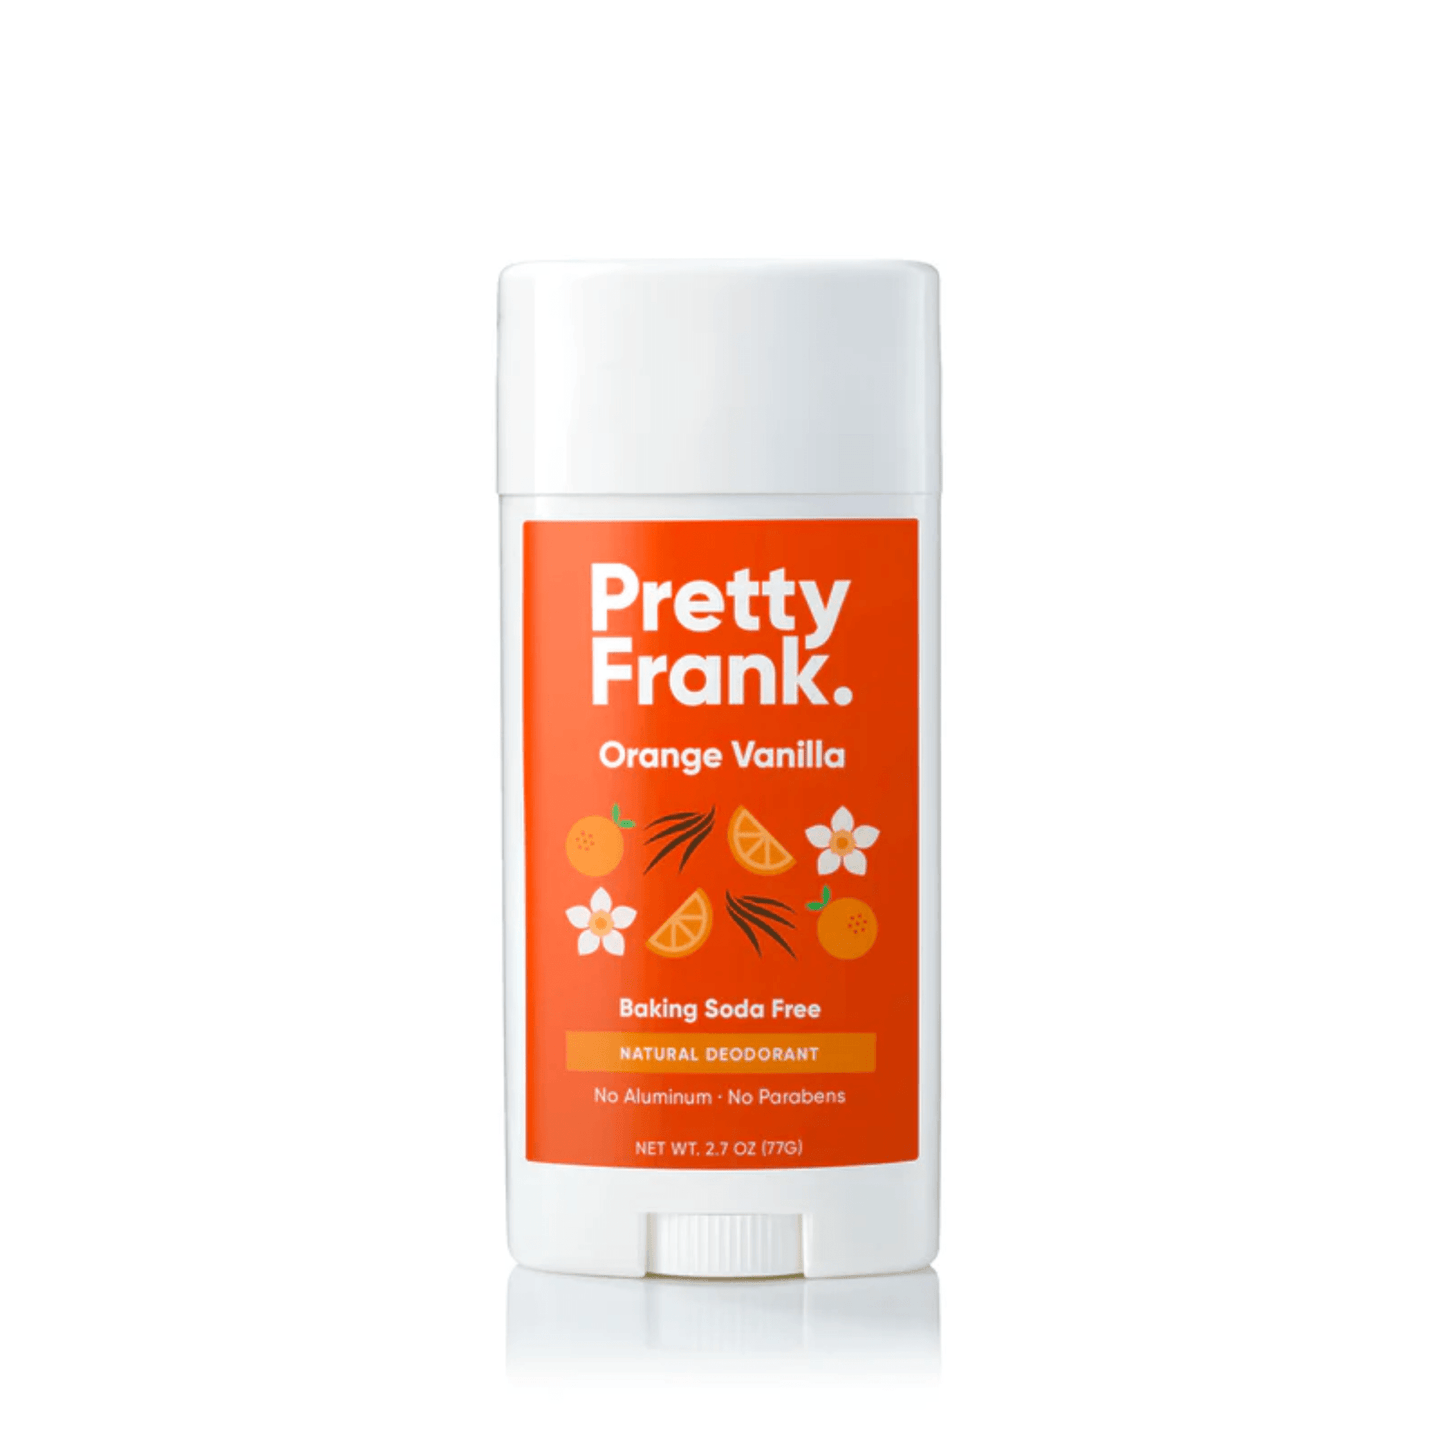 Primary Image of Orange Vanilla Baking Soda Free Deodorant